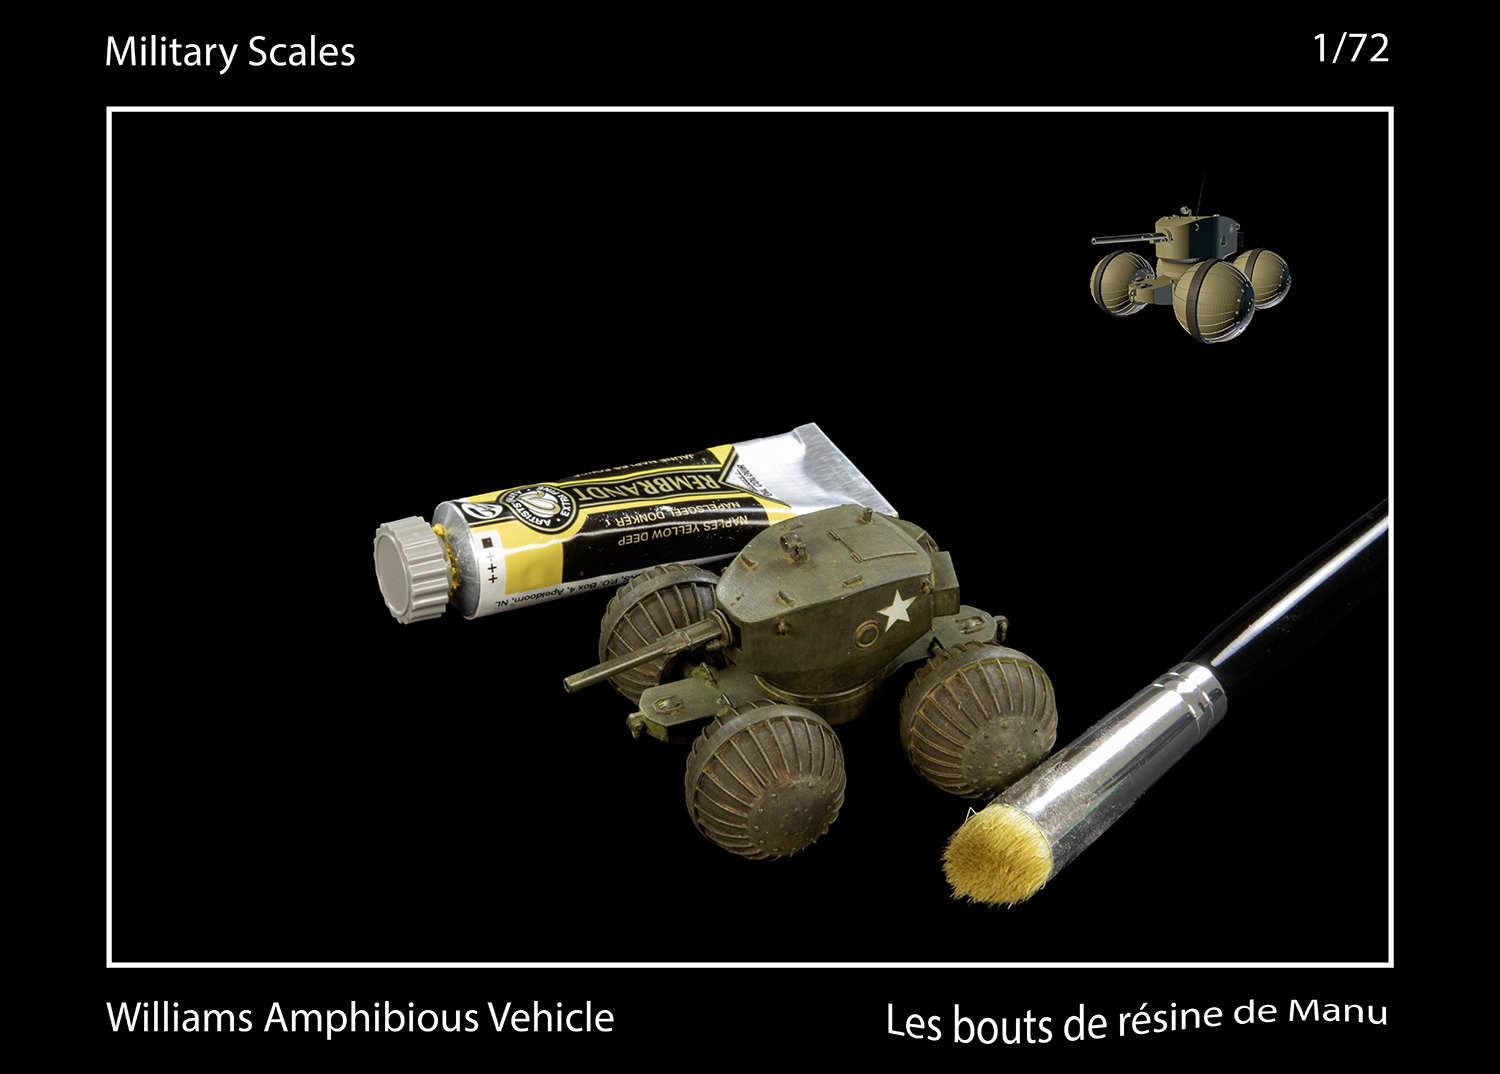 [Military Scales] Williams Amphibious Vehicle - MAJ 10/03 Pequ